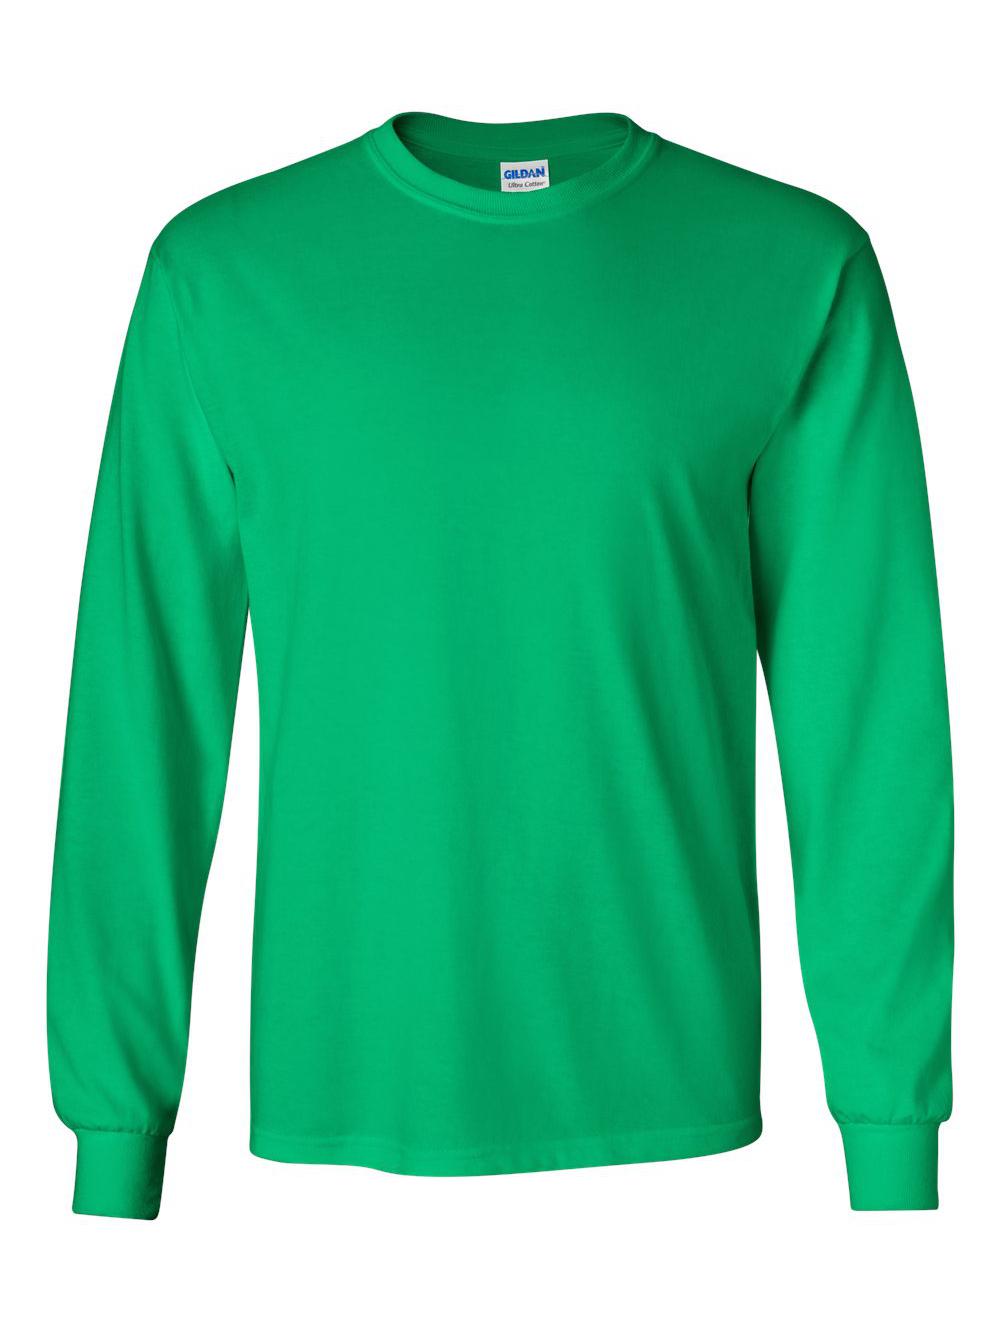 Gildan Unisex Ultra Cotton Long Sleeve T-Shirt - image 1 of 3